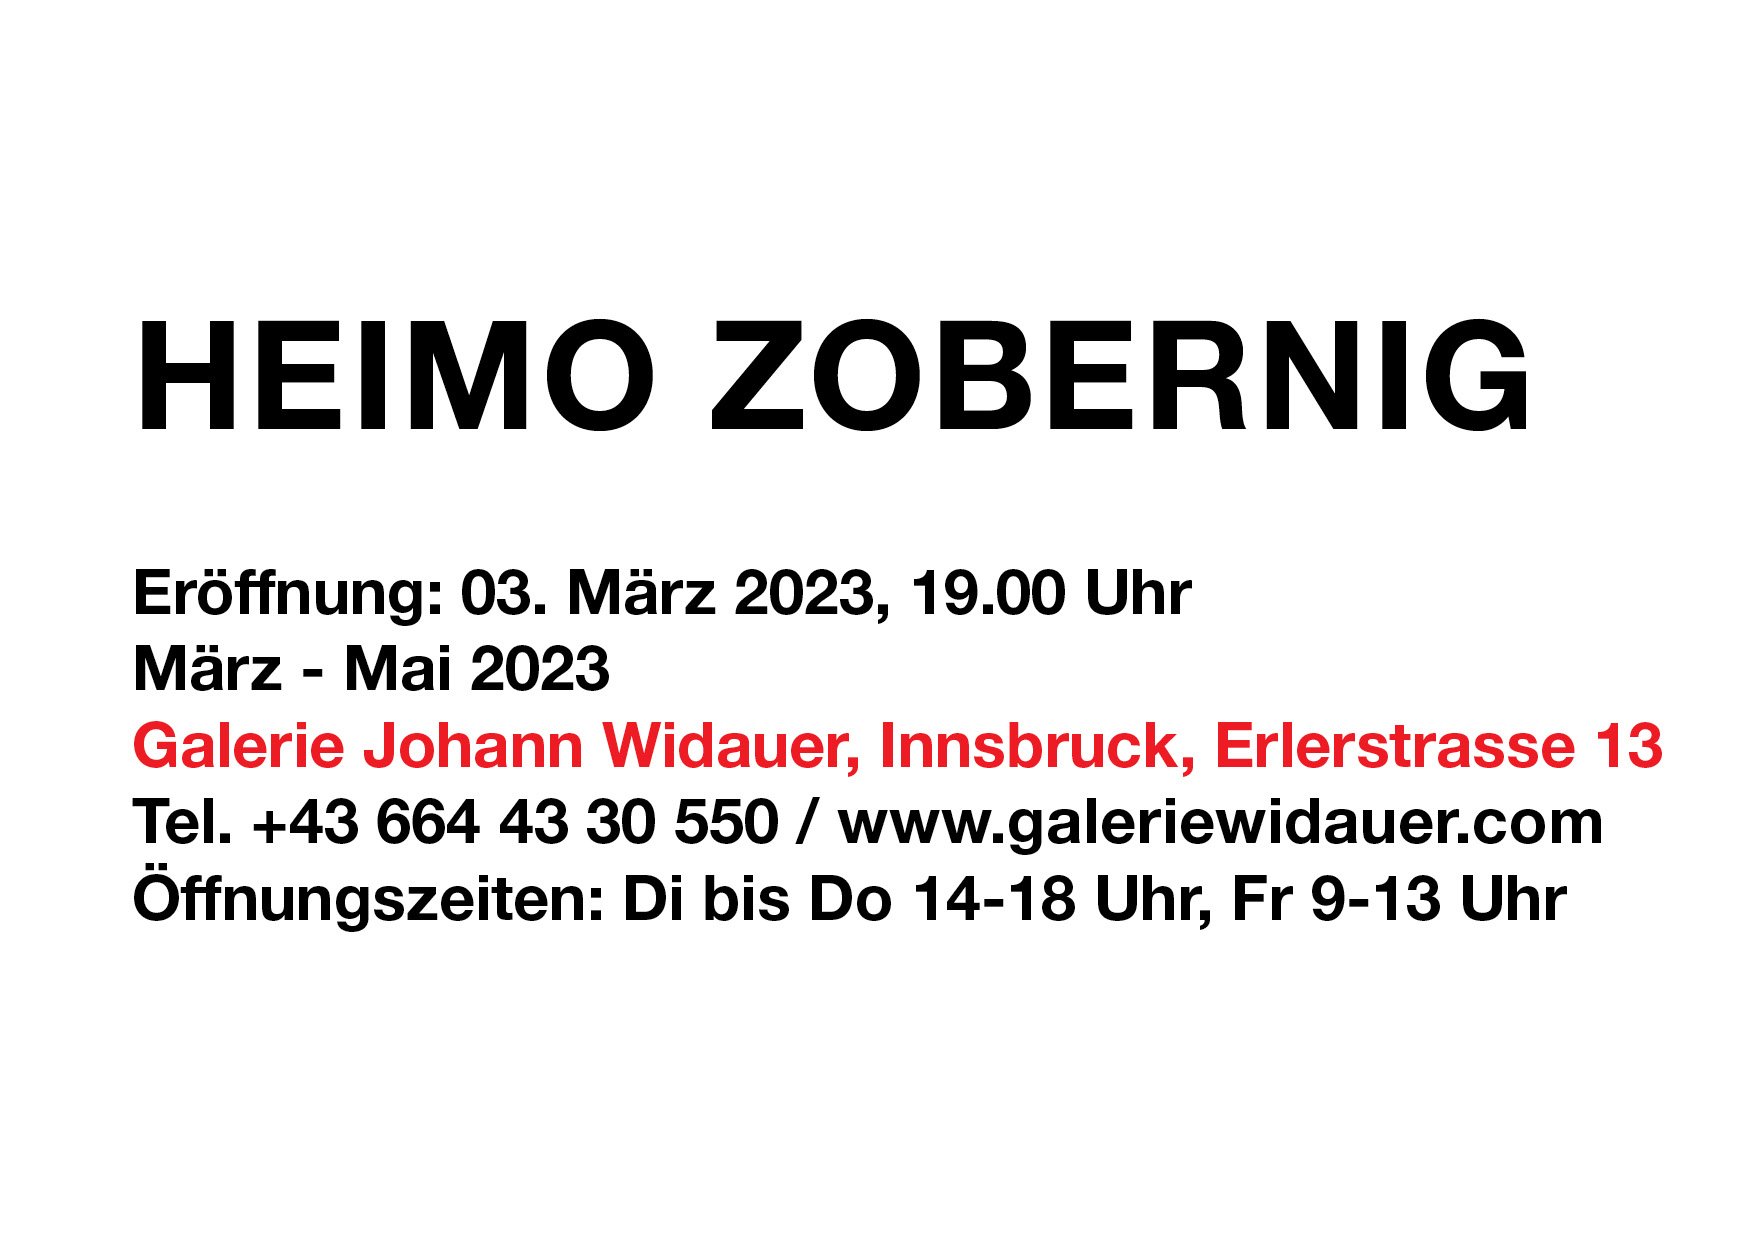 2023_Exh_01_Galerie-Johann-Widauer_Heimo-Zobernig_Opening-Invitation.jpg